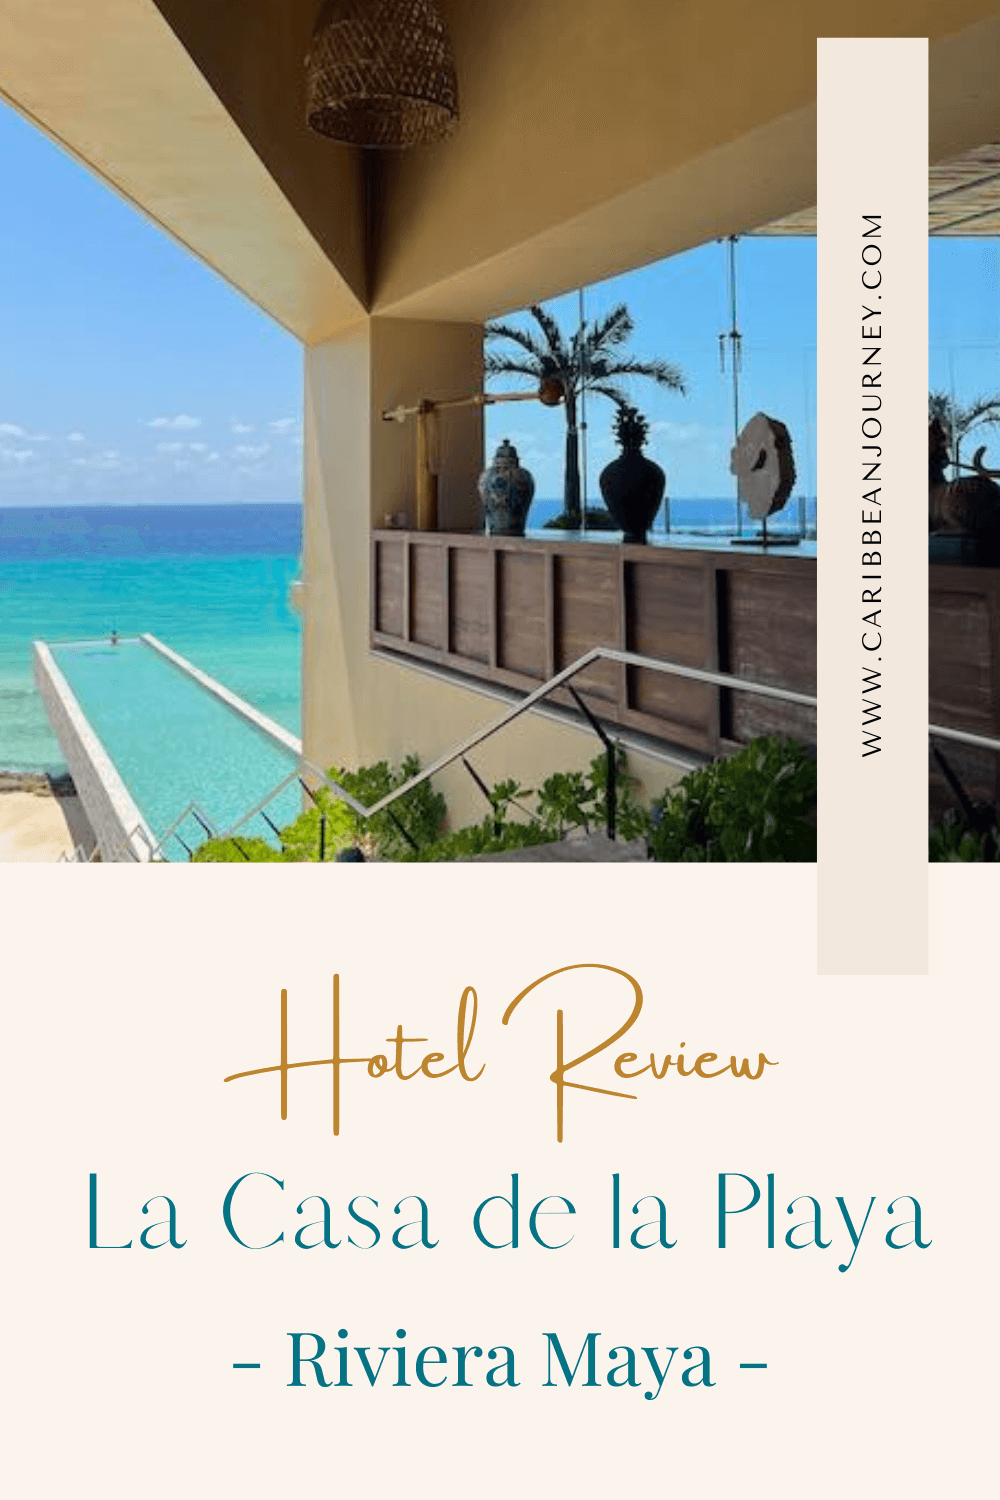 Hotel La Casa de la Playa adults only all-inclusive hotel in Mexico.